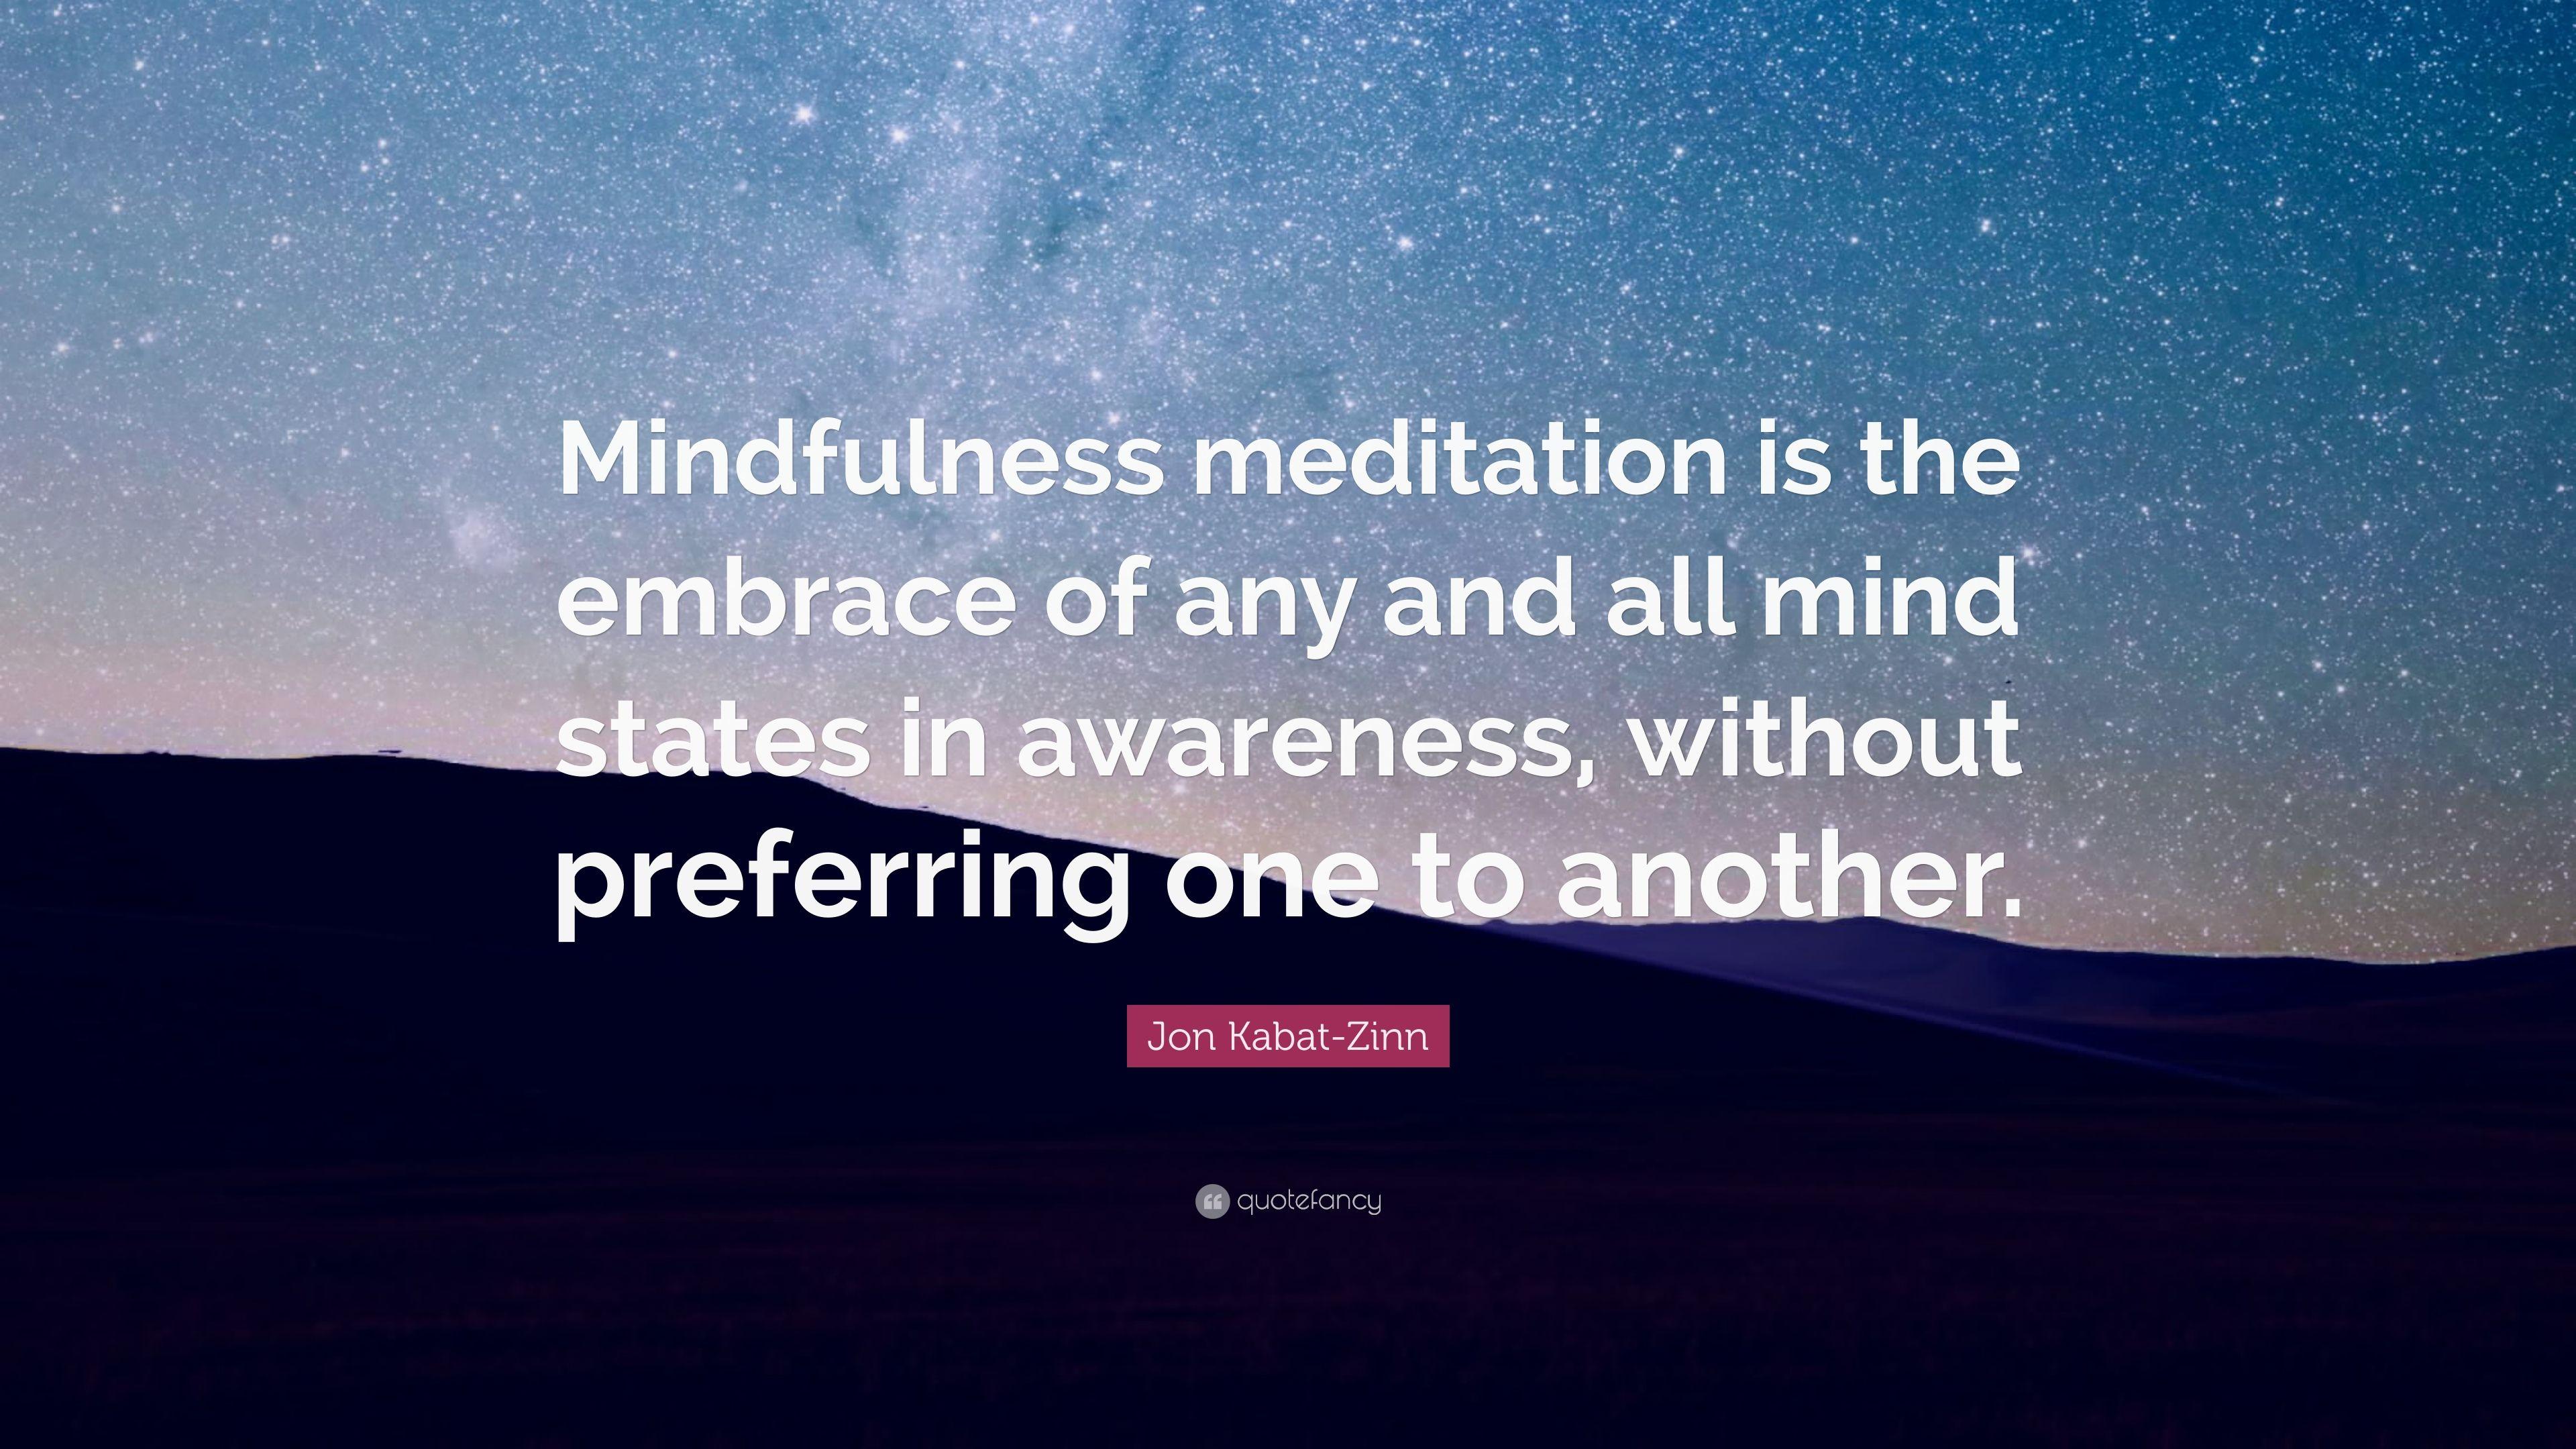 Jon Kabat Zinn Quote: “Mindfulness Meditation Is The Embrace Of Any